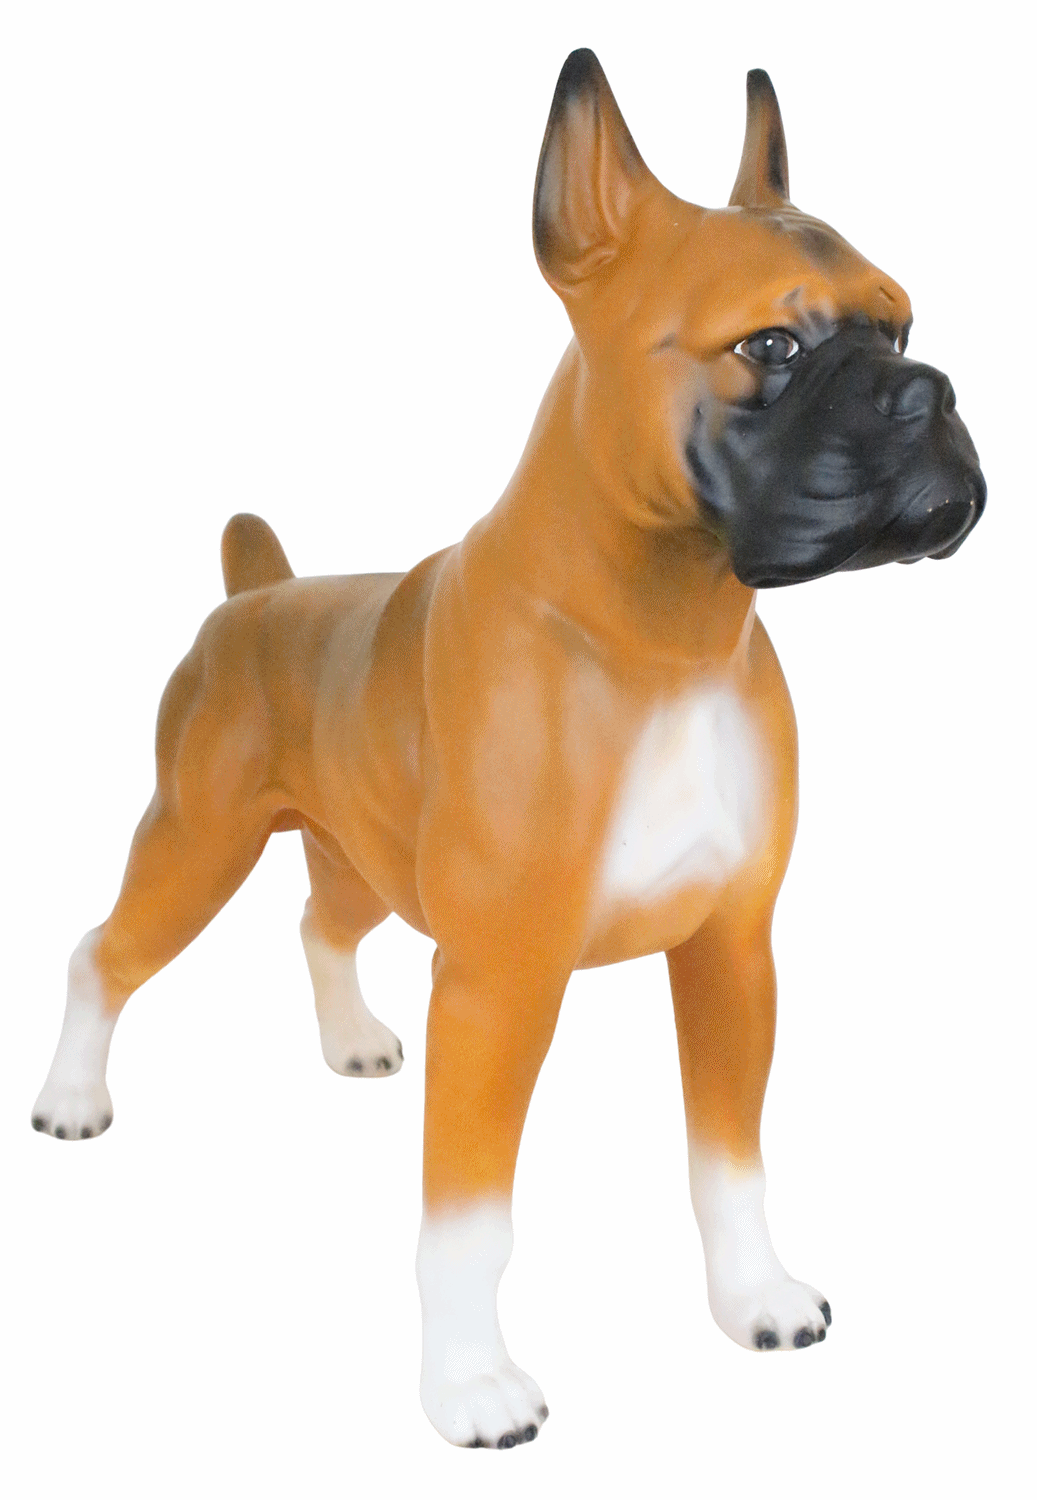 https://static.js-gartendeko.com/media/image/69/c9/0b/Boxer-Hund-Tierfigur-Hundefigur-Deko-Dekohund-BoxerHund-kiS041-1.gif